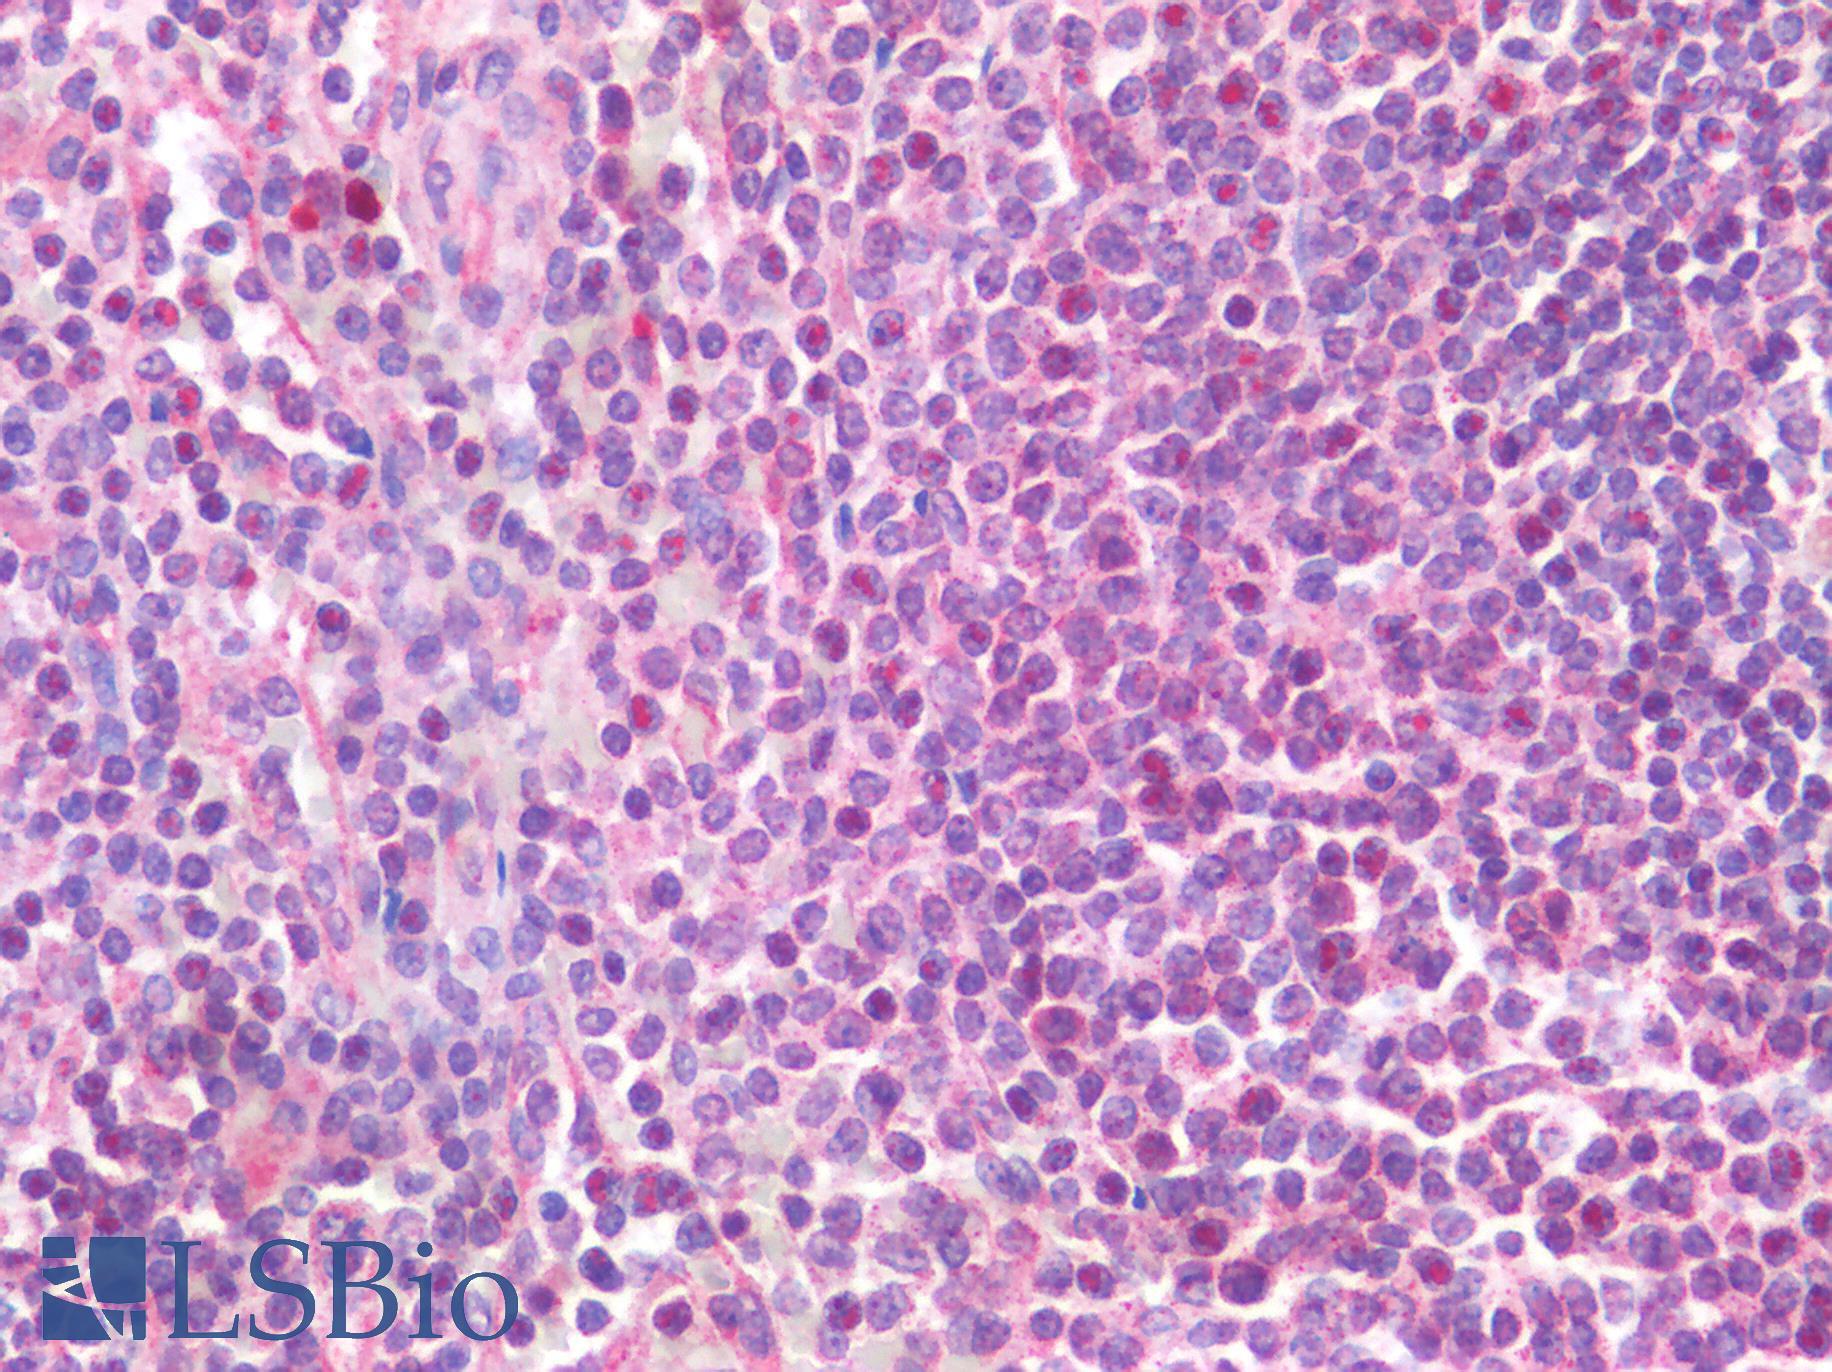 IL-33 Antibody - Human Spleen: Formalin-Fixed, Paraffin-Embedded (FFPE)